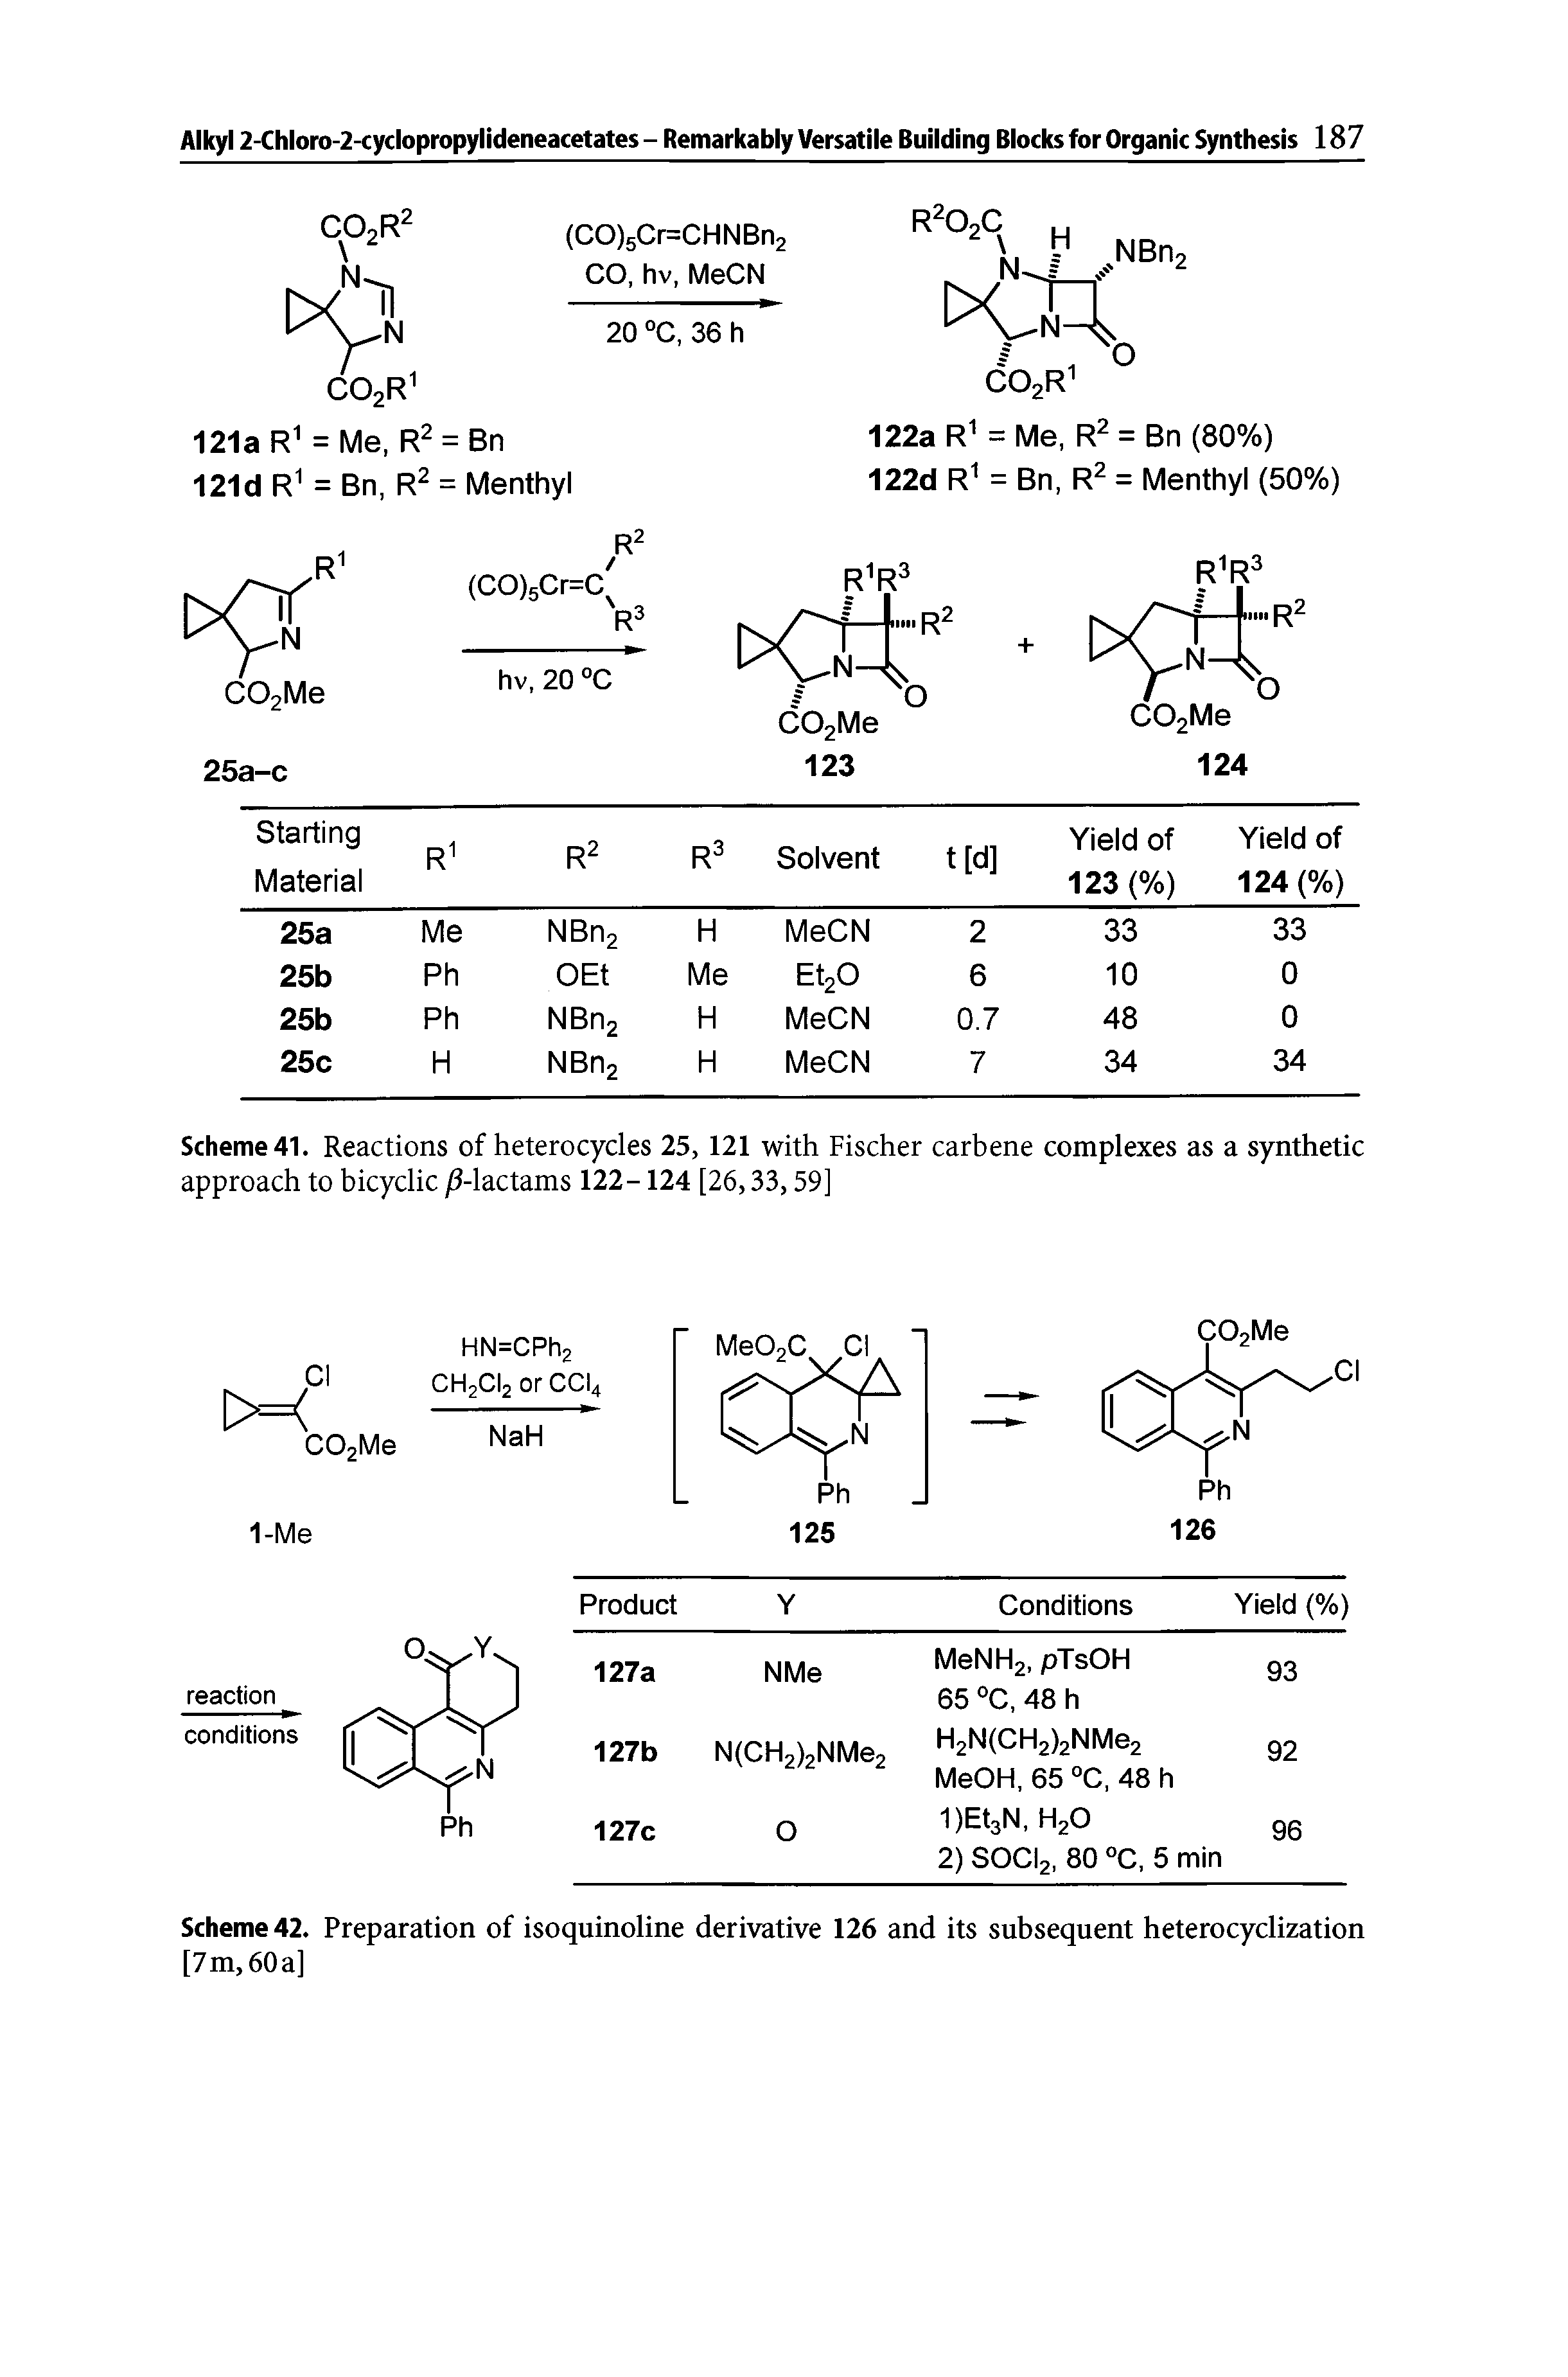 Scheme 42. Preparation of isoquinoline derivative 126 and its subsequent heterocyclization [7m, 60a]...